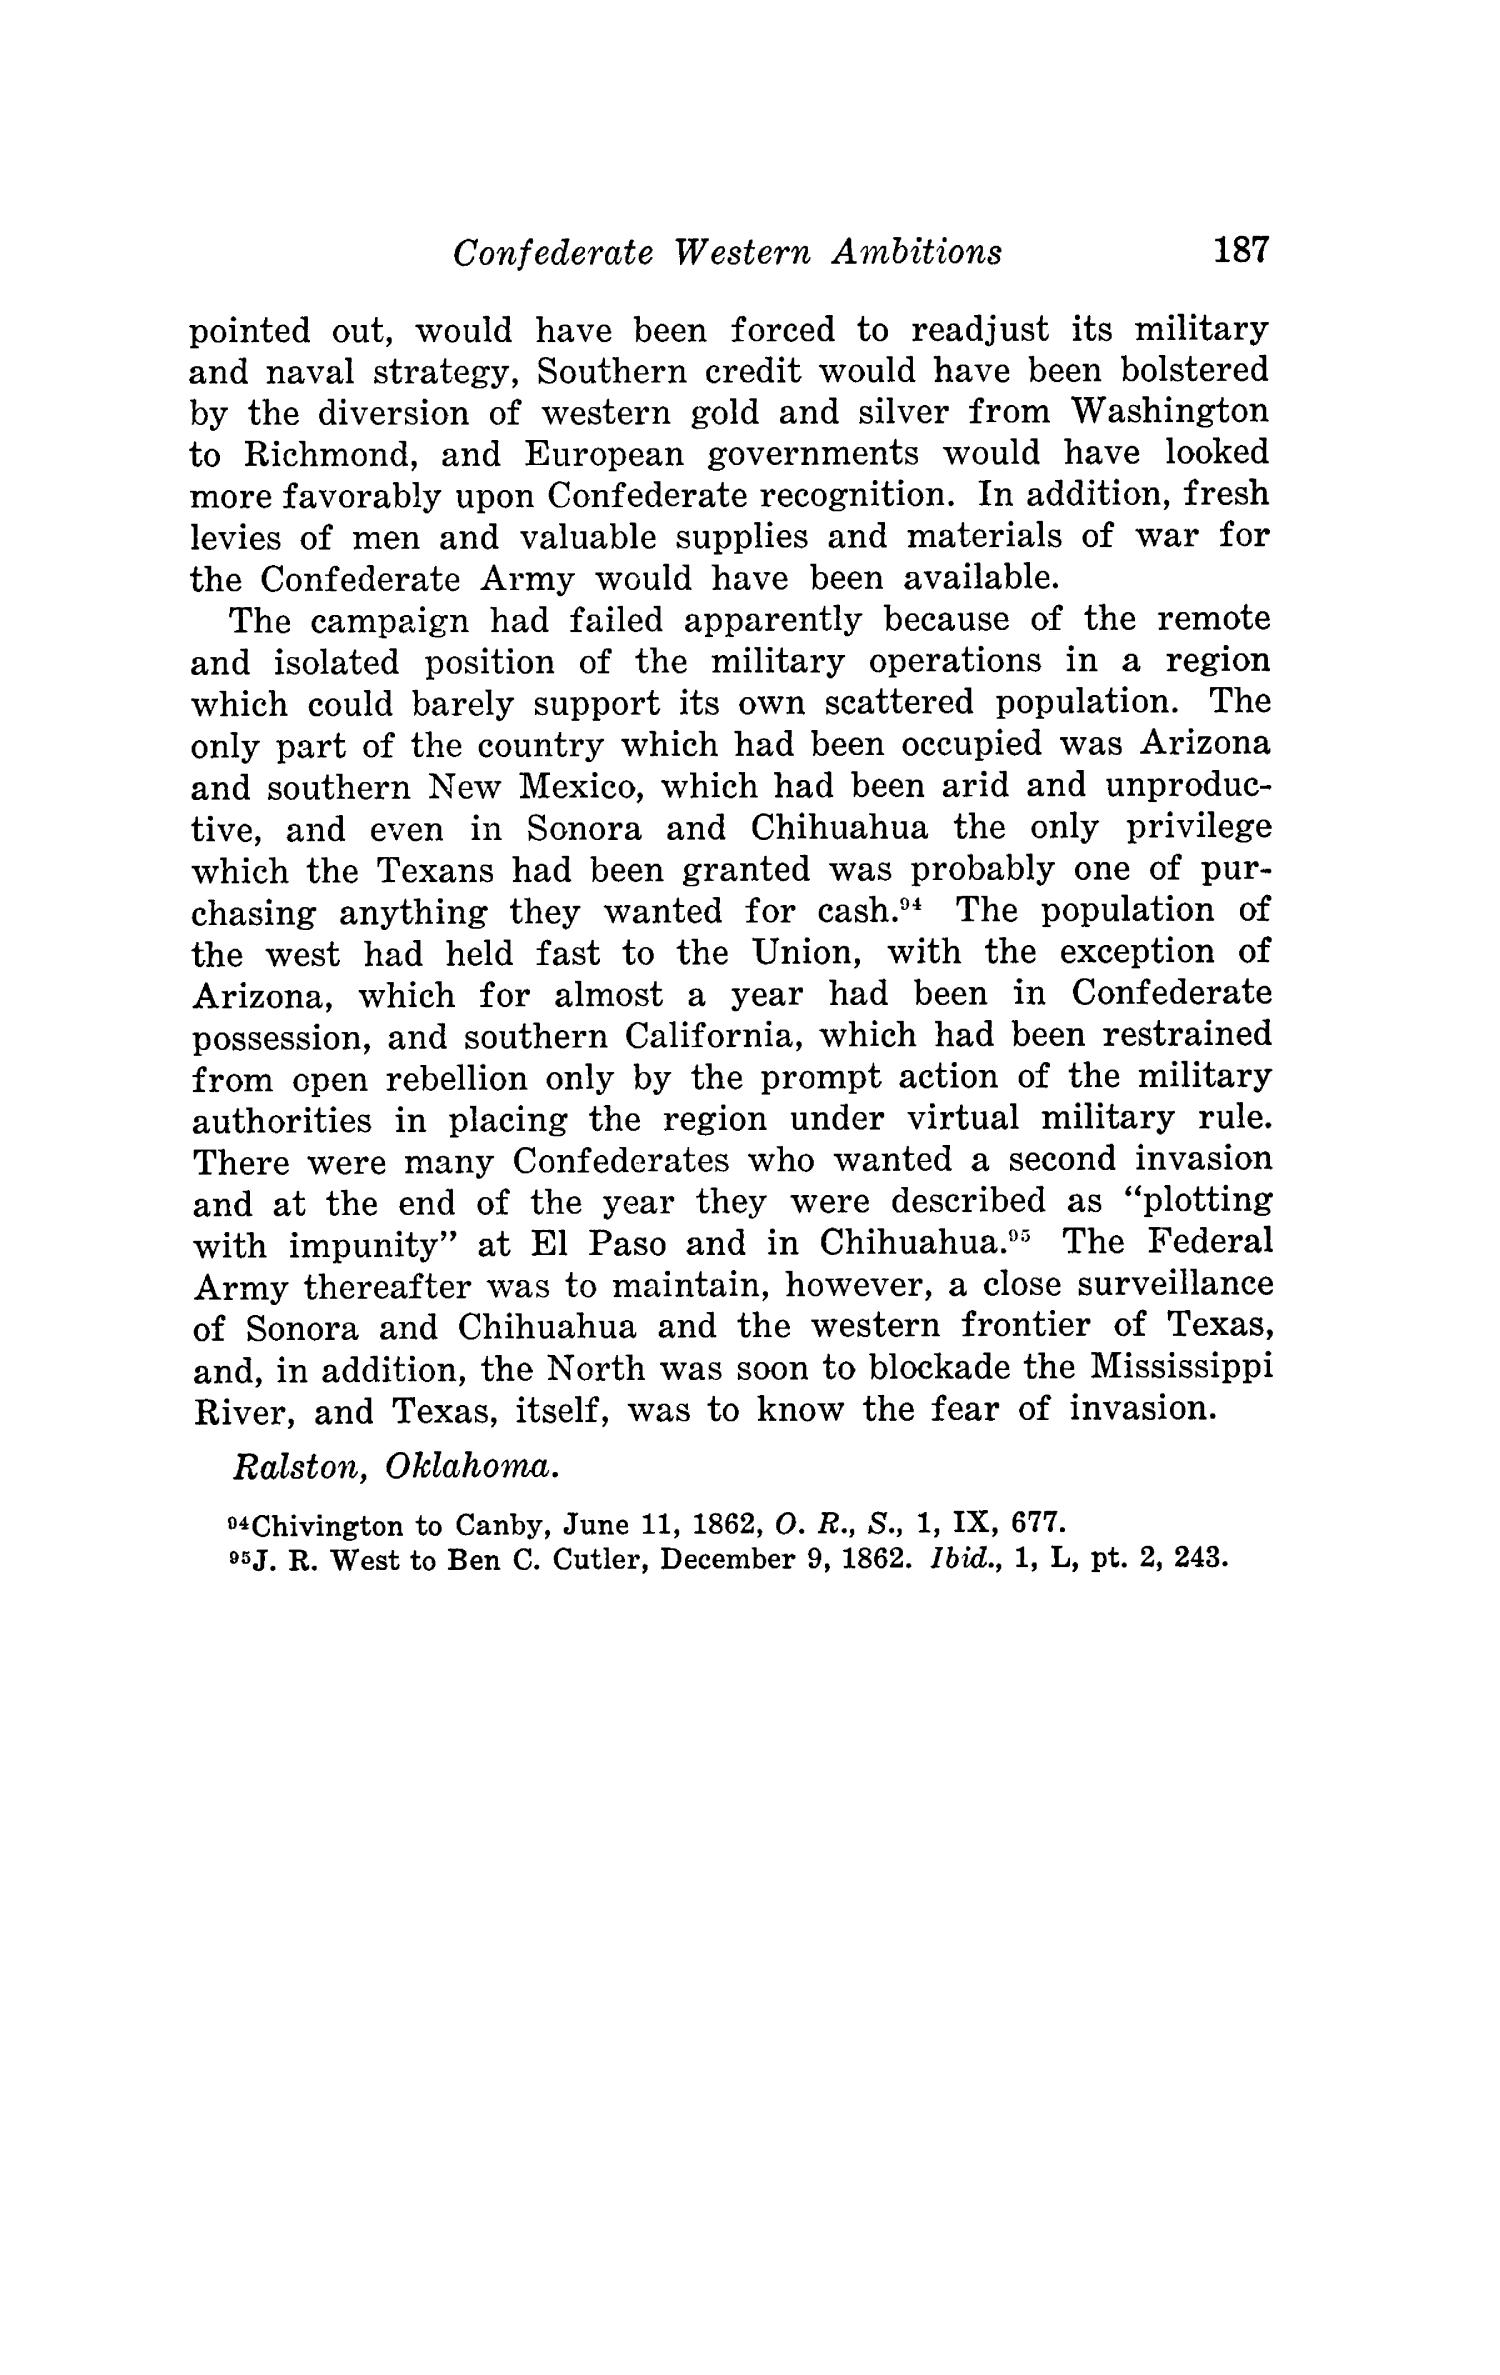 The Southwestern Historical Quarterly, Volume 44, July 1940 - April, 1941
                                                
                                                    187
                                                